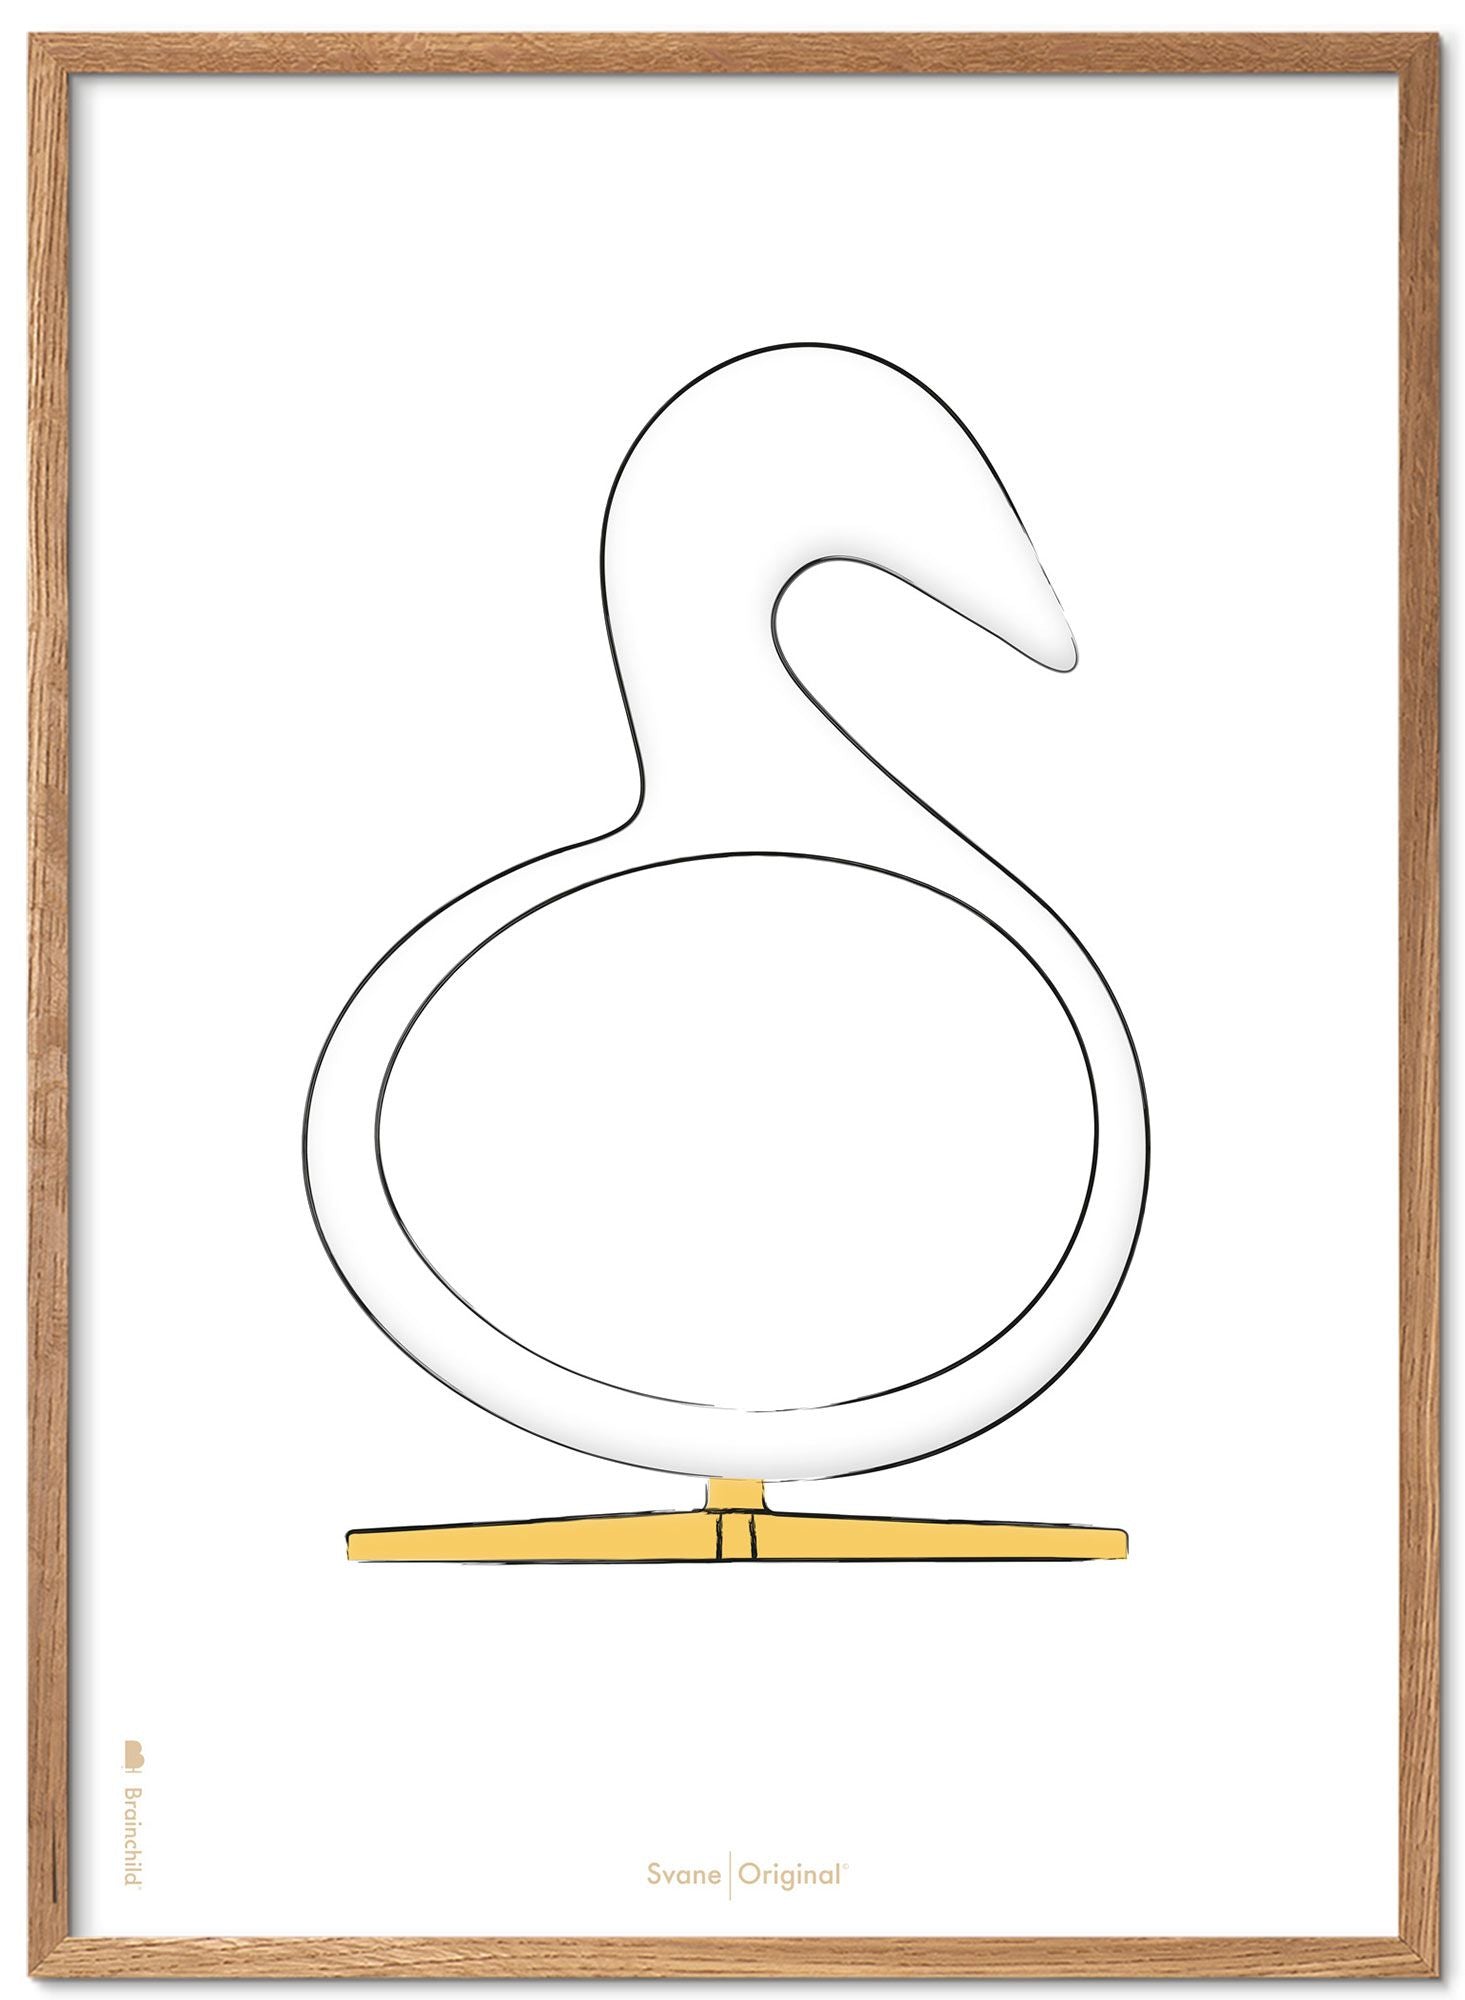 Brainchild Swan Design Sketch Poster Frame Made of Light Wood A5, White Bakgrund